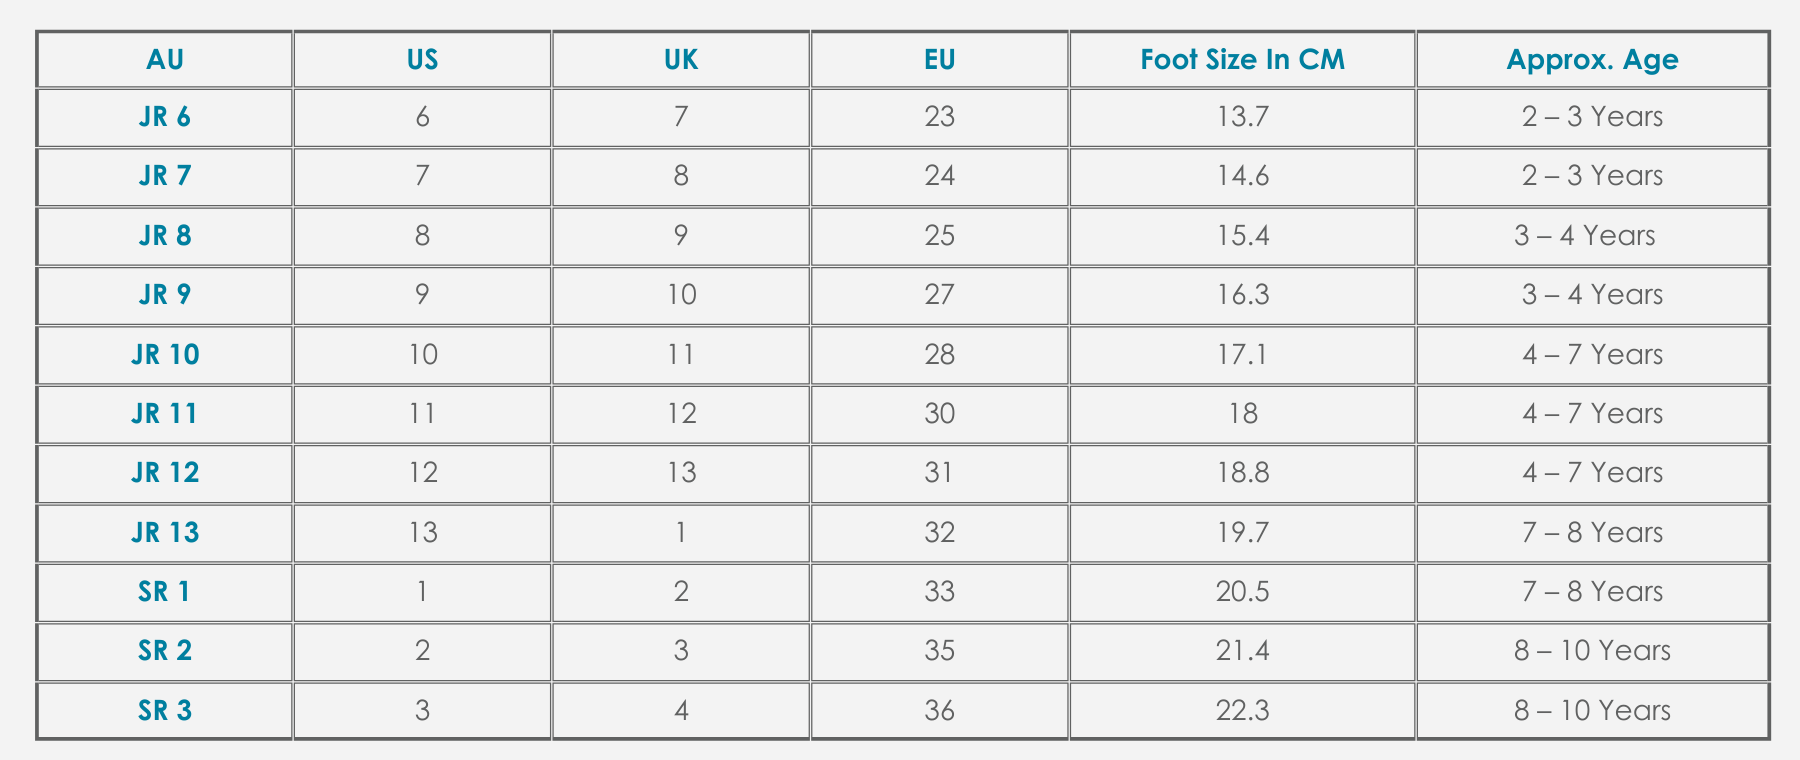 Adjustable toggle top kids gumboots international size chart comparison